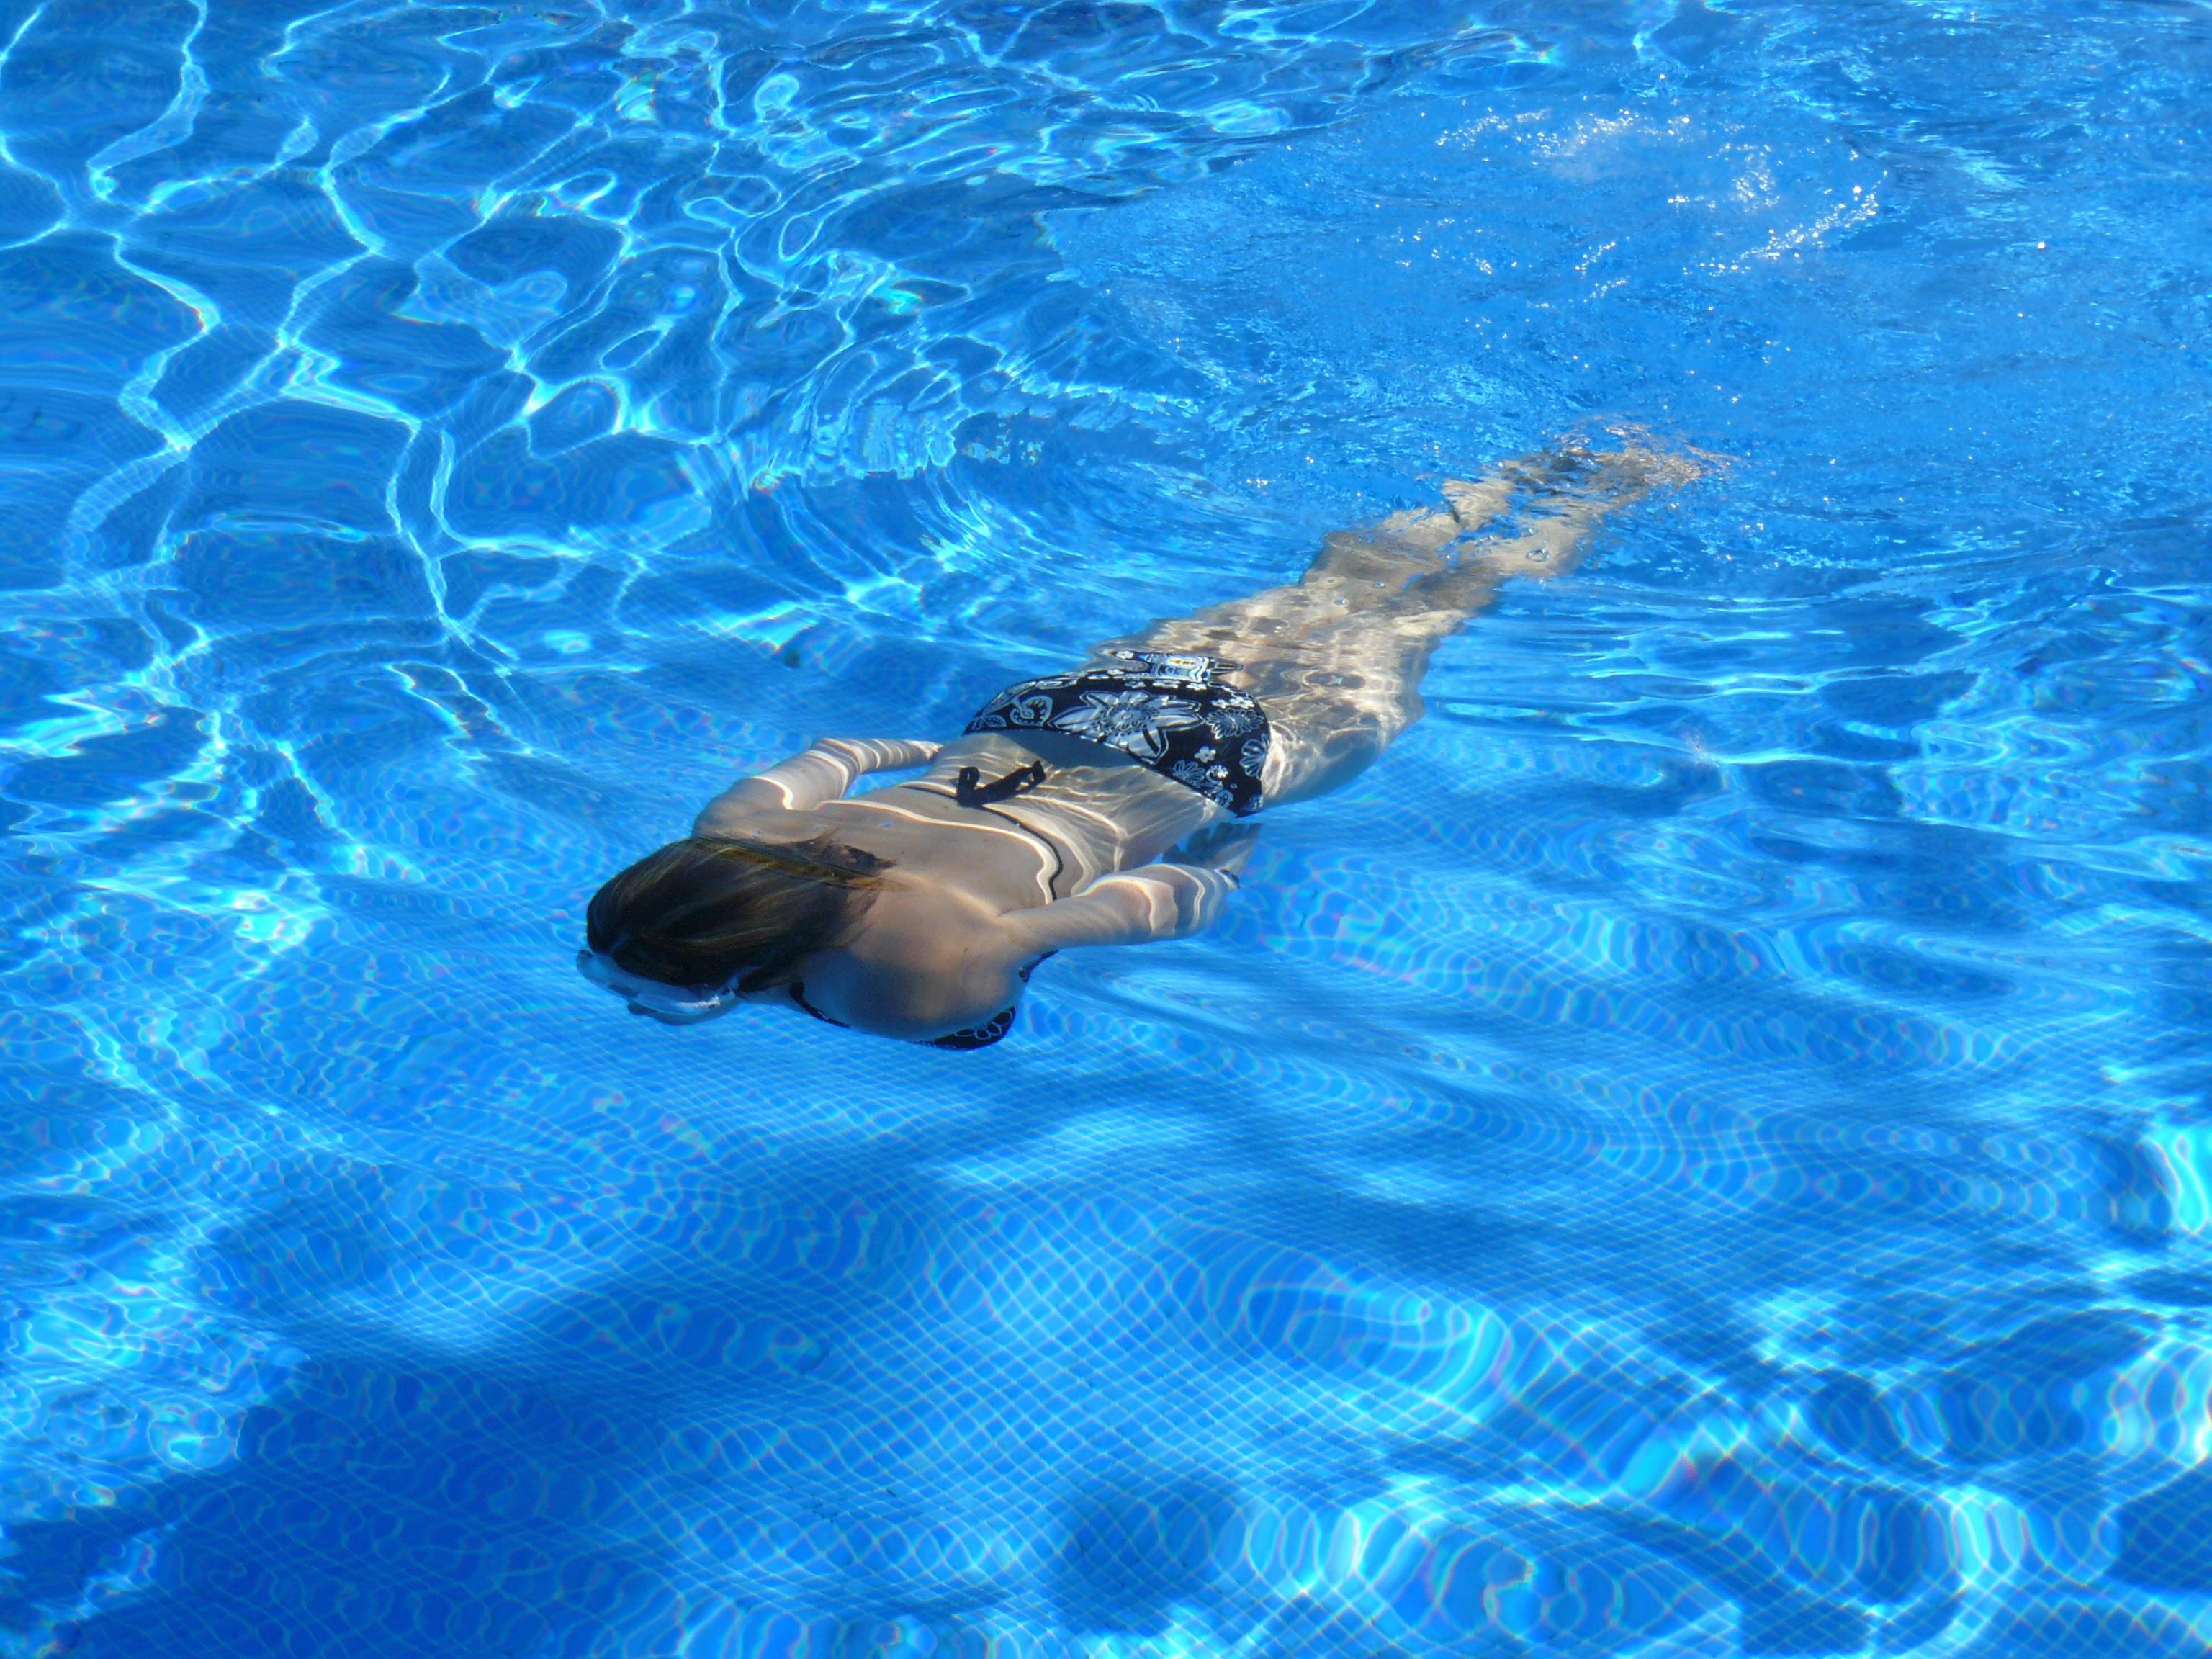 health benefits of swimming - reduce stress